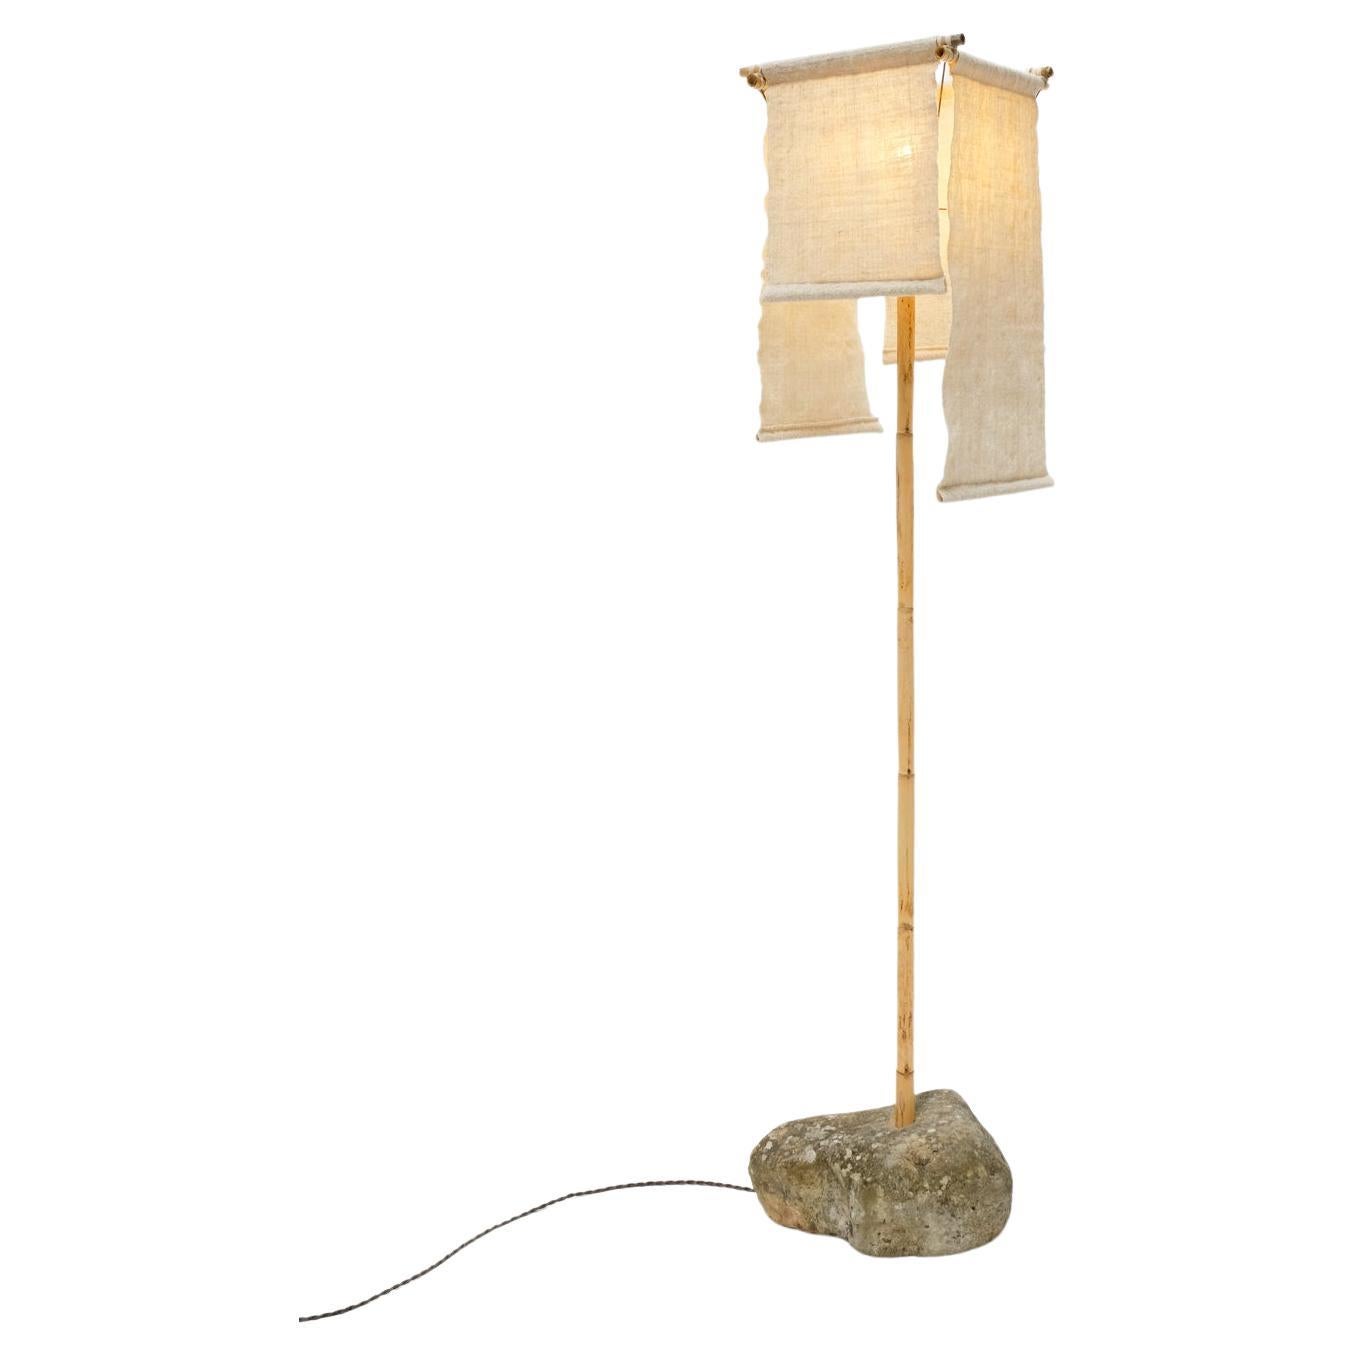 Azru Floor Lamp, Handspun, Handwoven Lampshade, Made of Local Rock & Reed For Sale